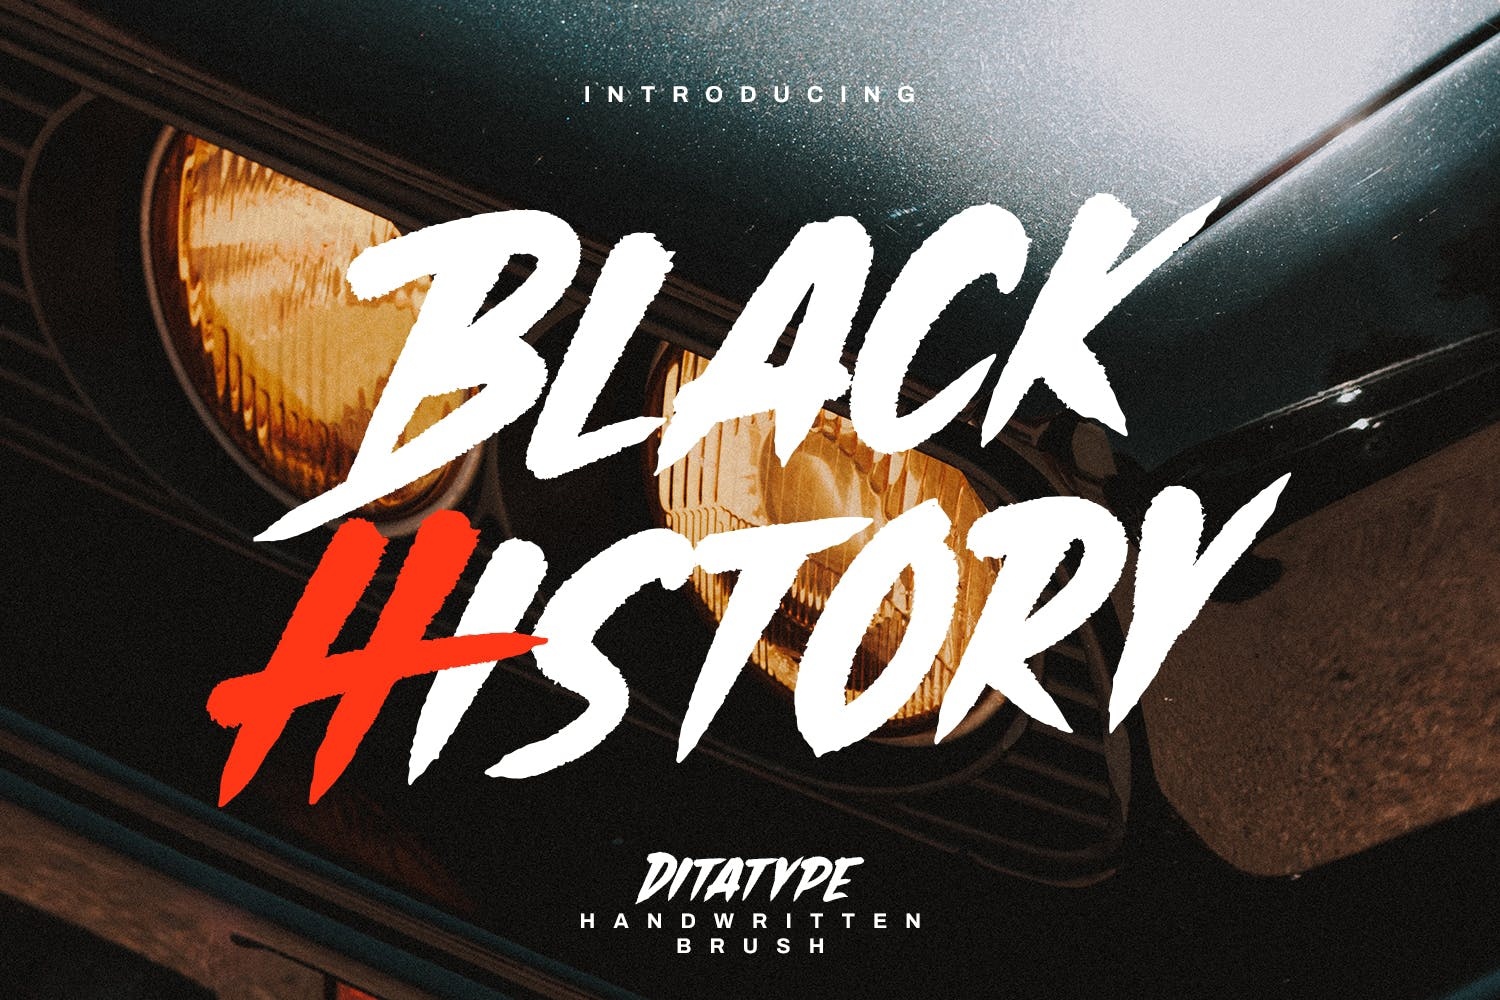 Police Black History